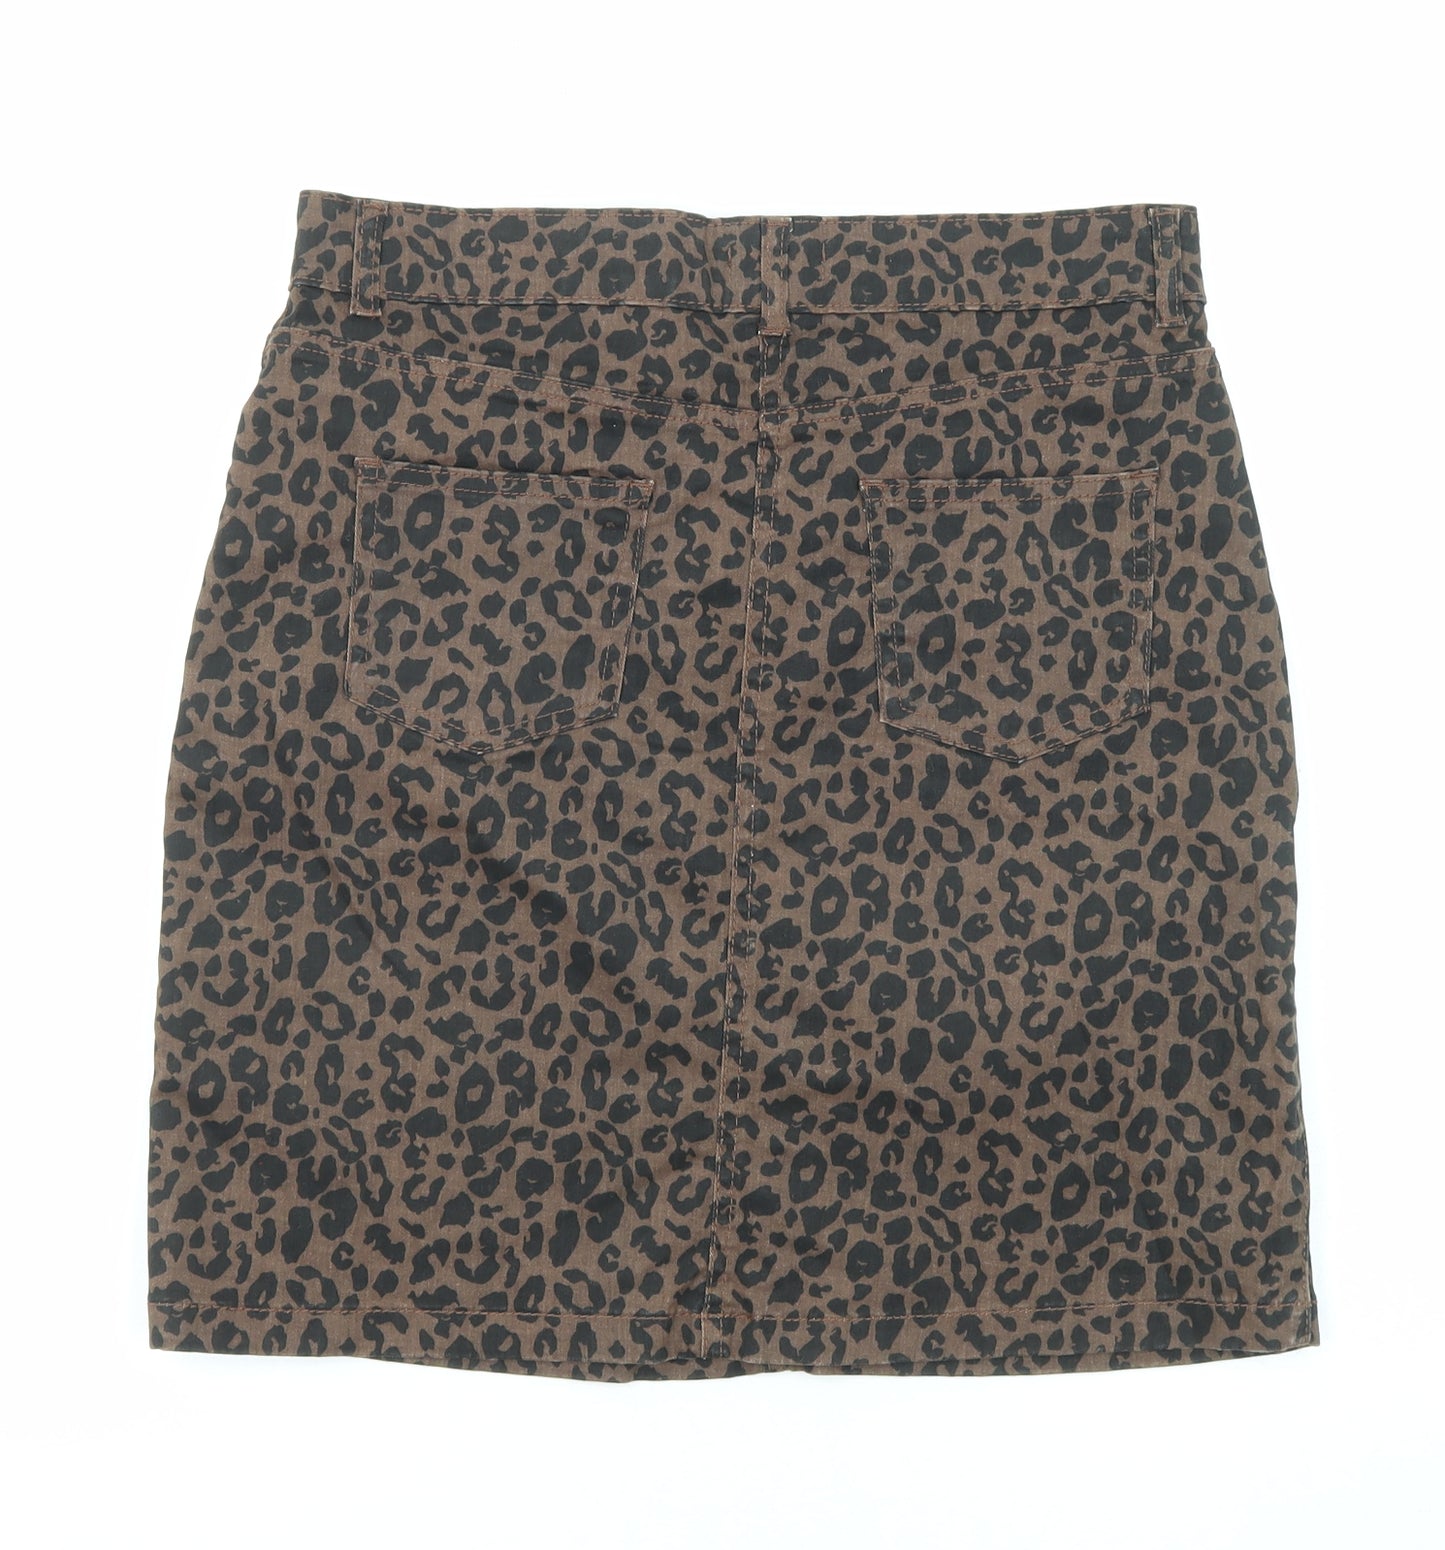 M&Co Womens Brown Animal Print Cotton A-Line Skirt Size 10 Zip - Leopard pattern